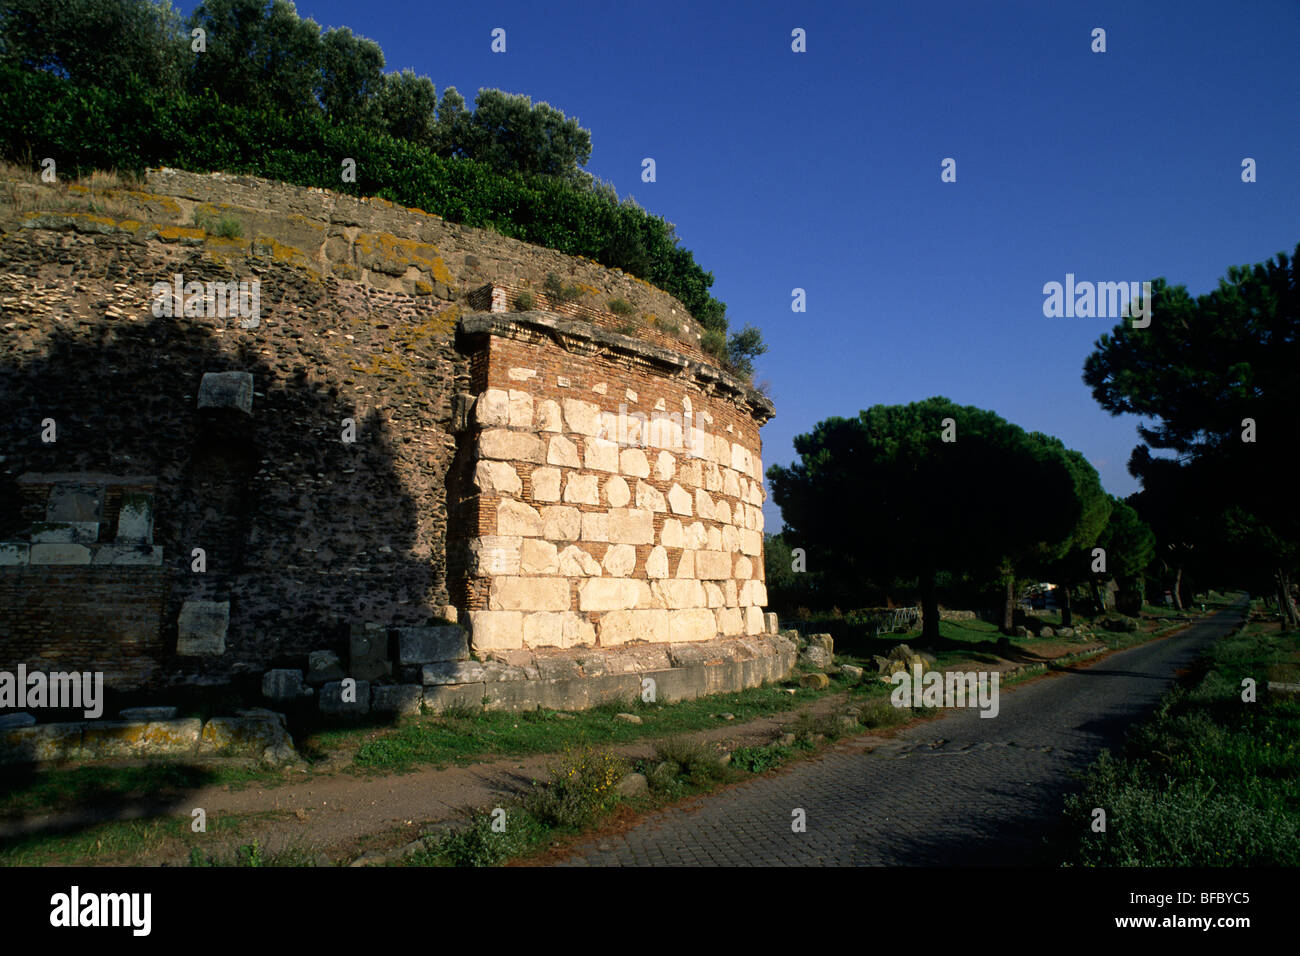 Italy, Rome, Via Appia Antica, Old Appian Way, sepulchre of Casal Rotondo Stock Photo